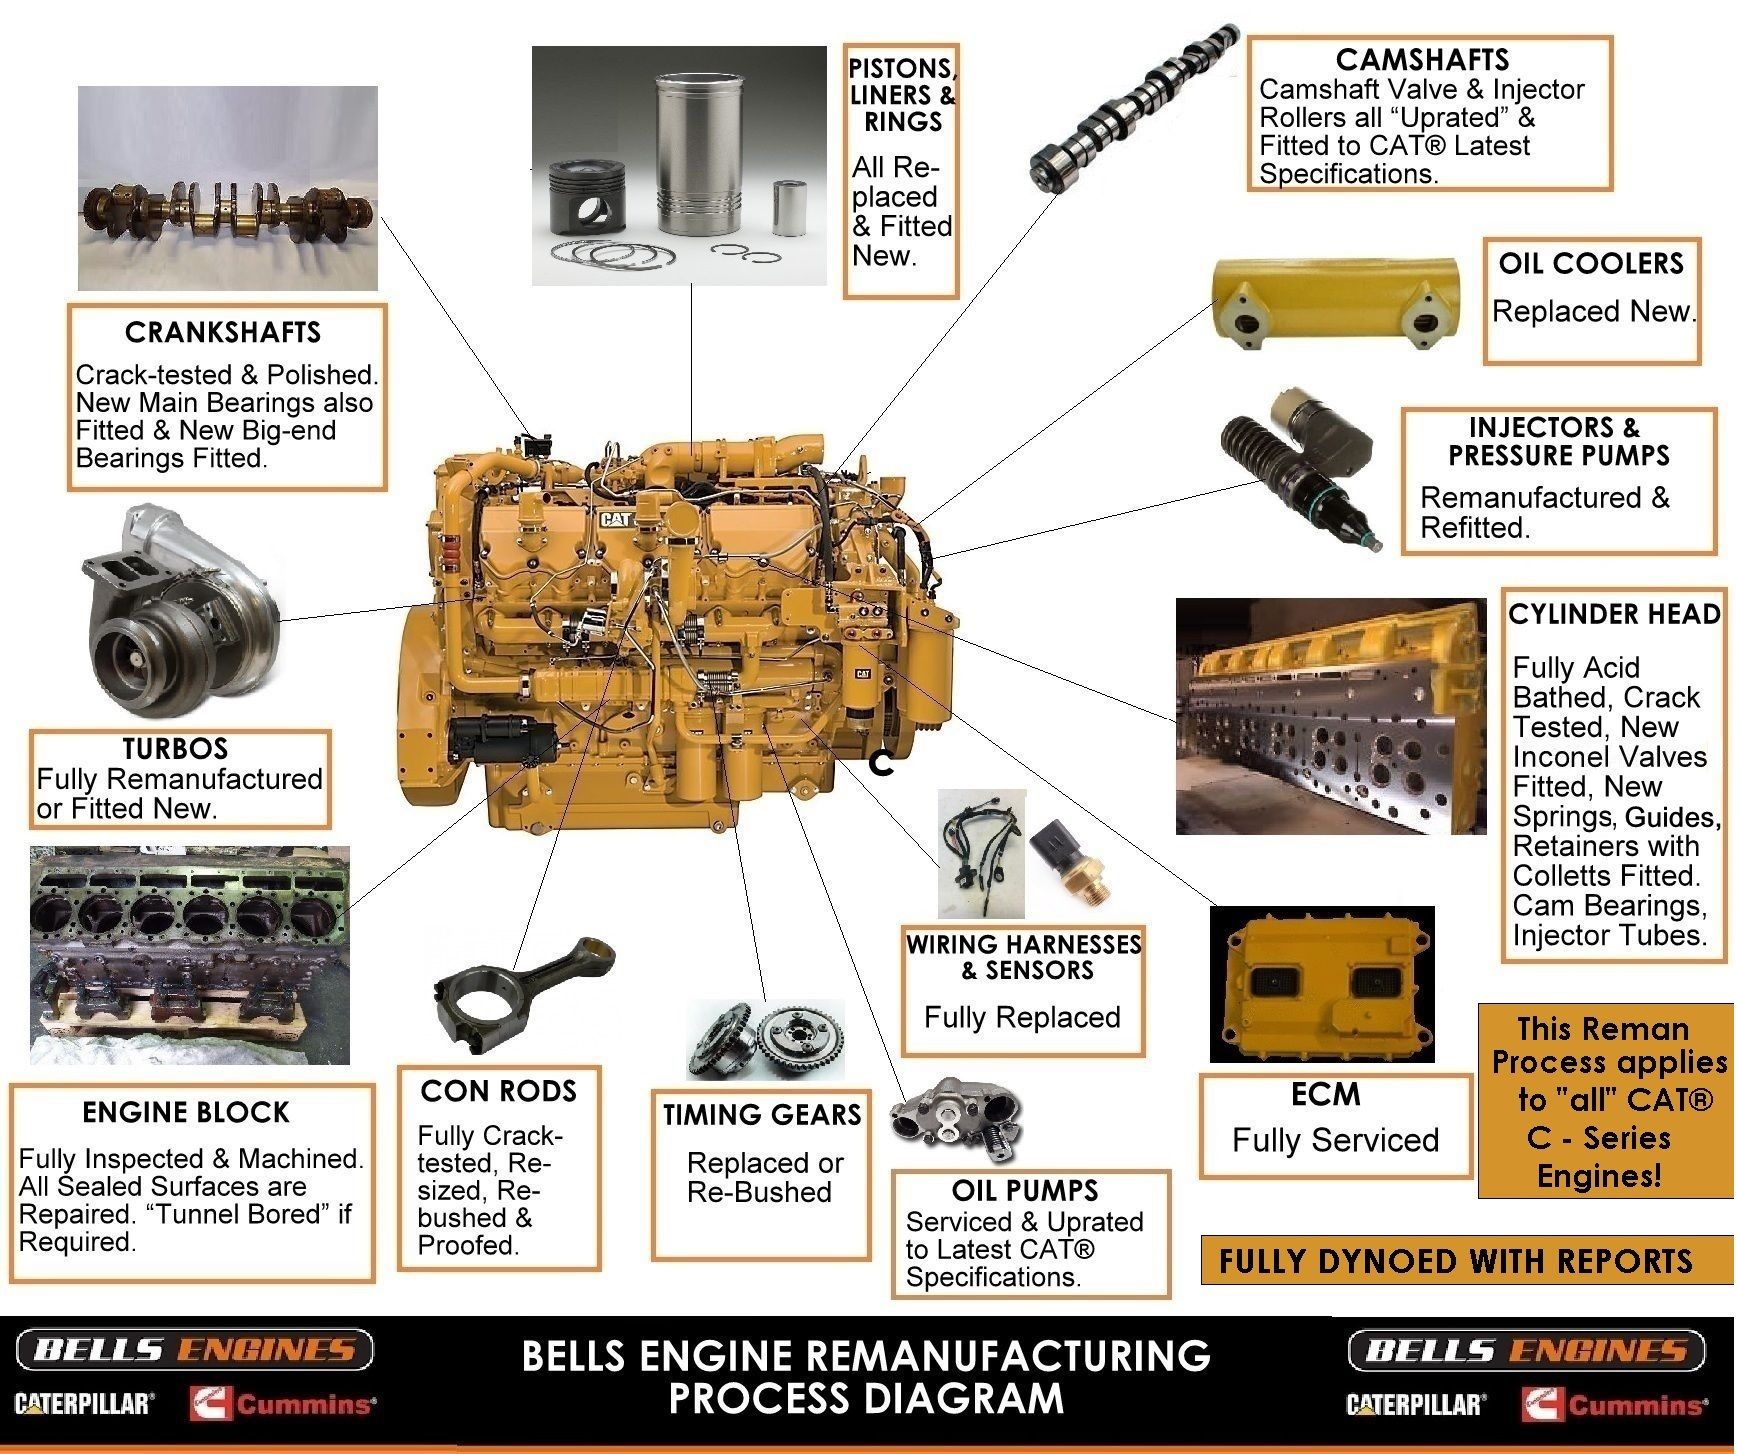 The CaterpillarÂ® Engine Remanufacturing Process